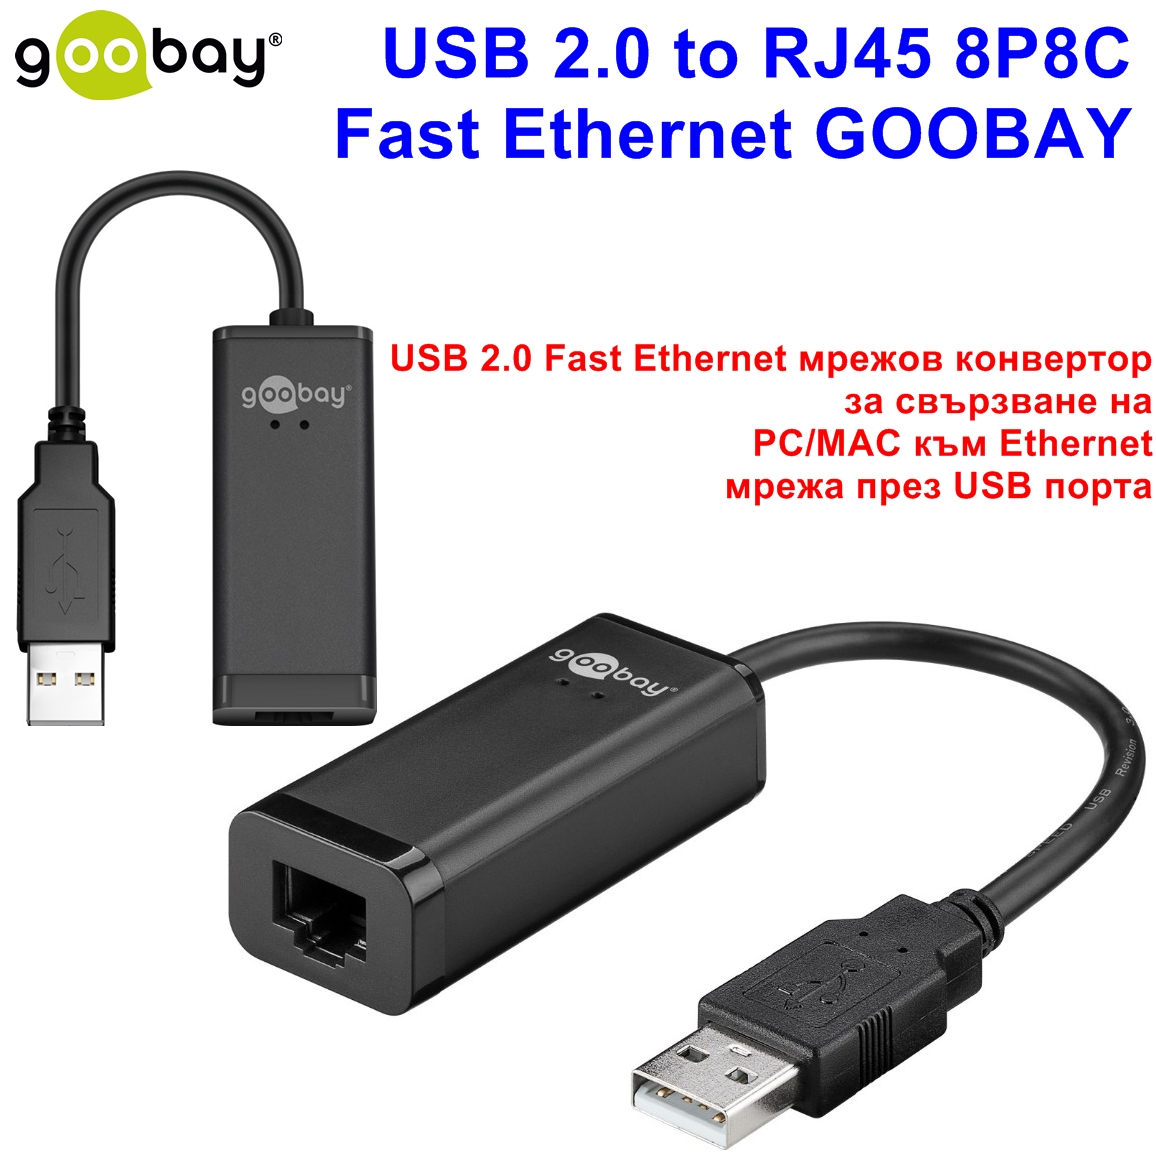 USB 2.0 to RJ45 8P8C Fast Ethernet GOOBAY